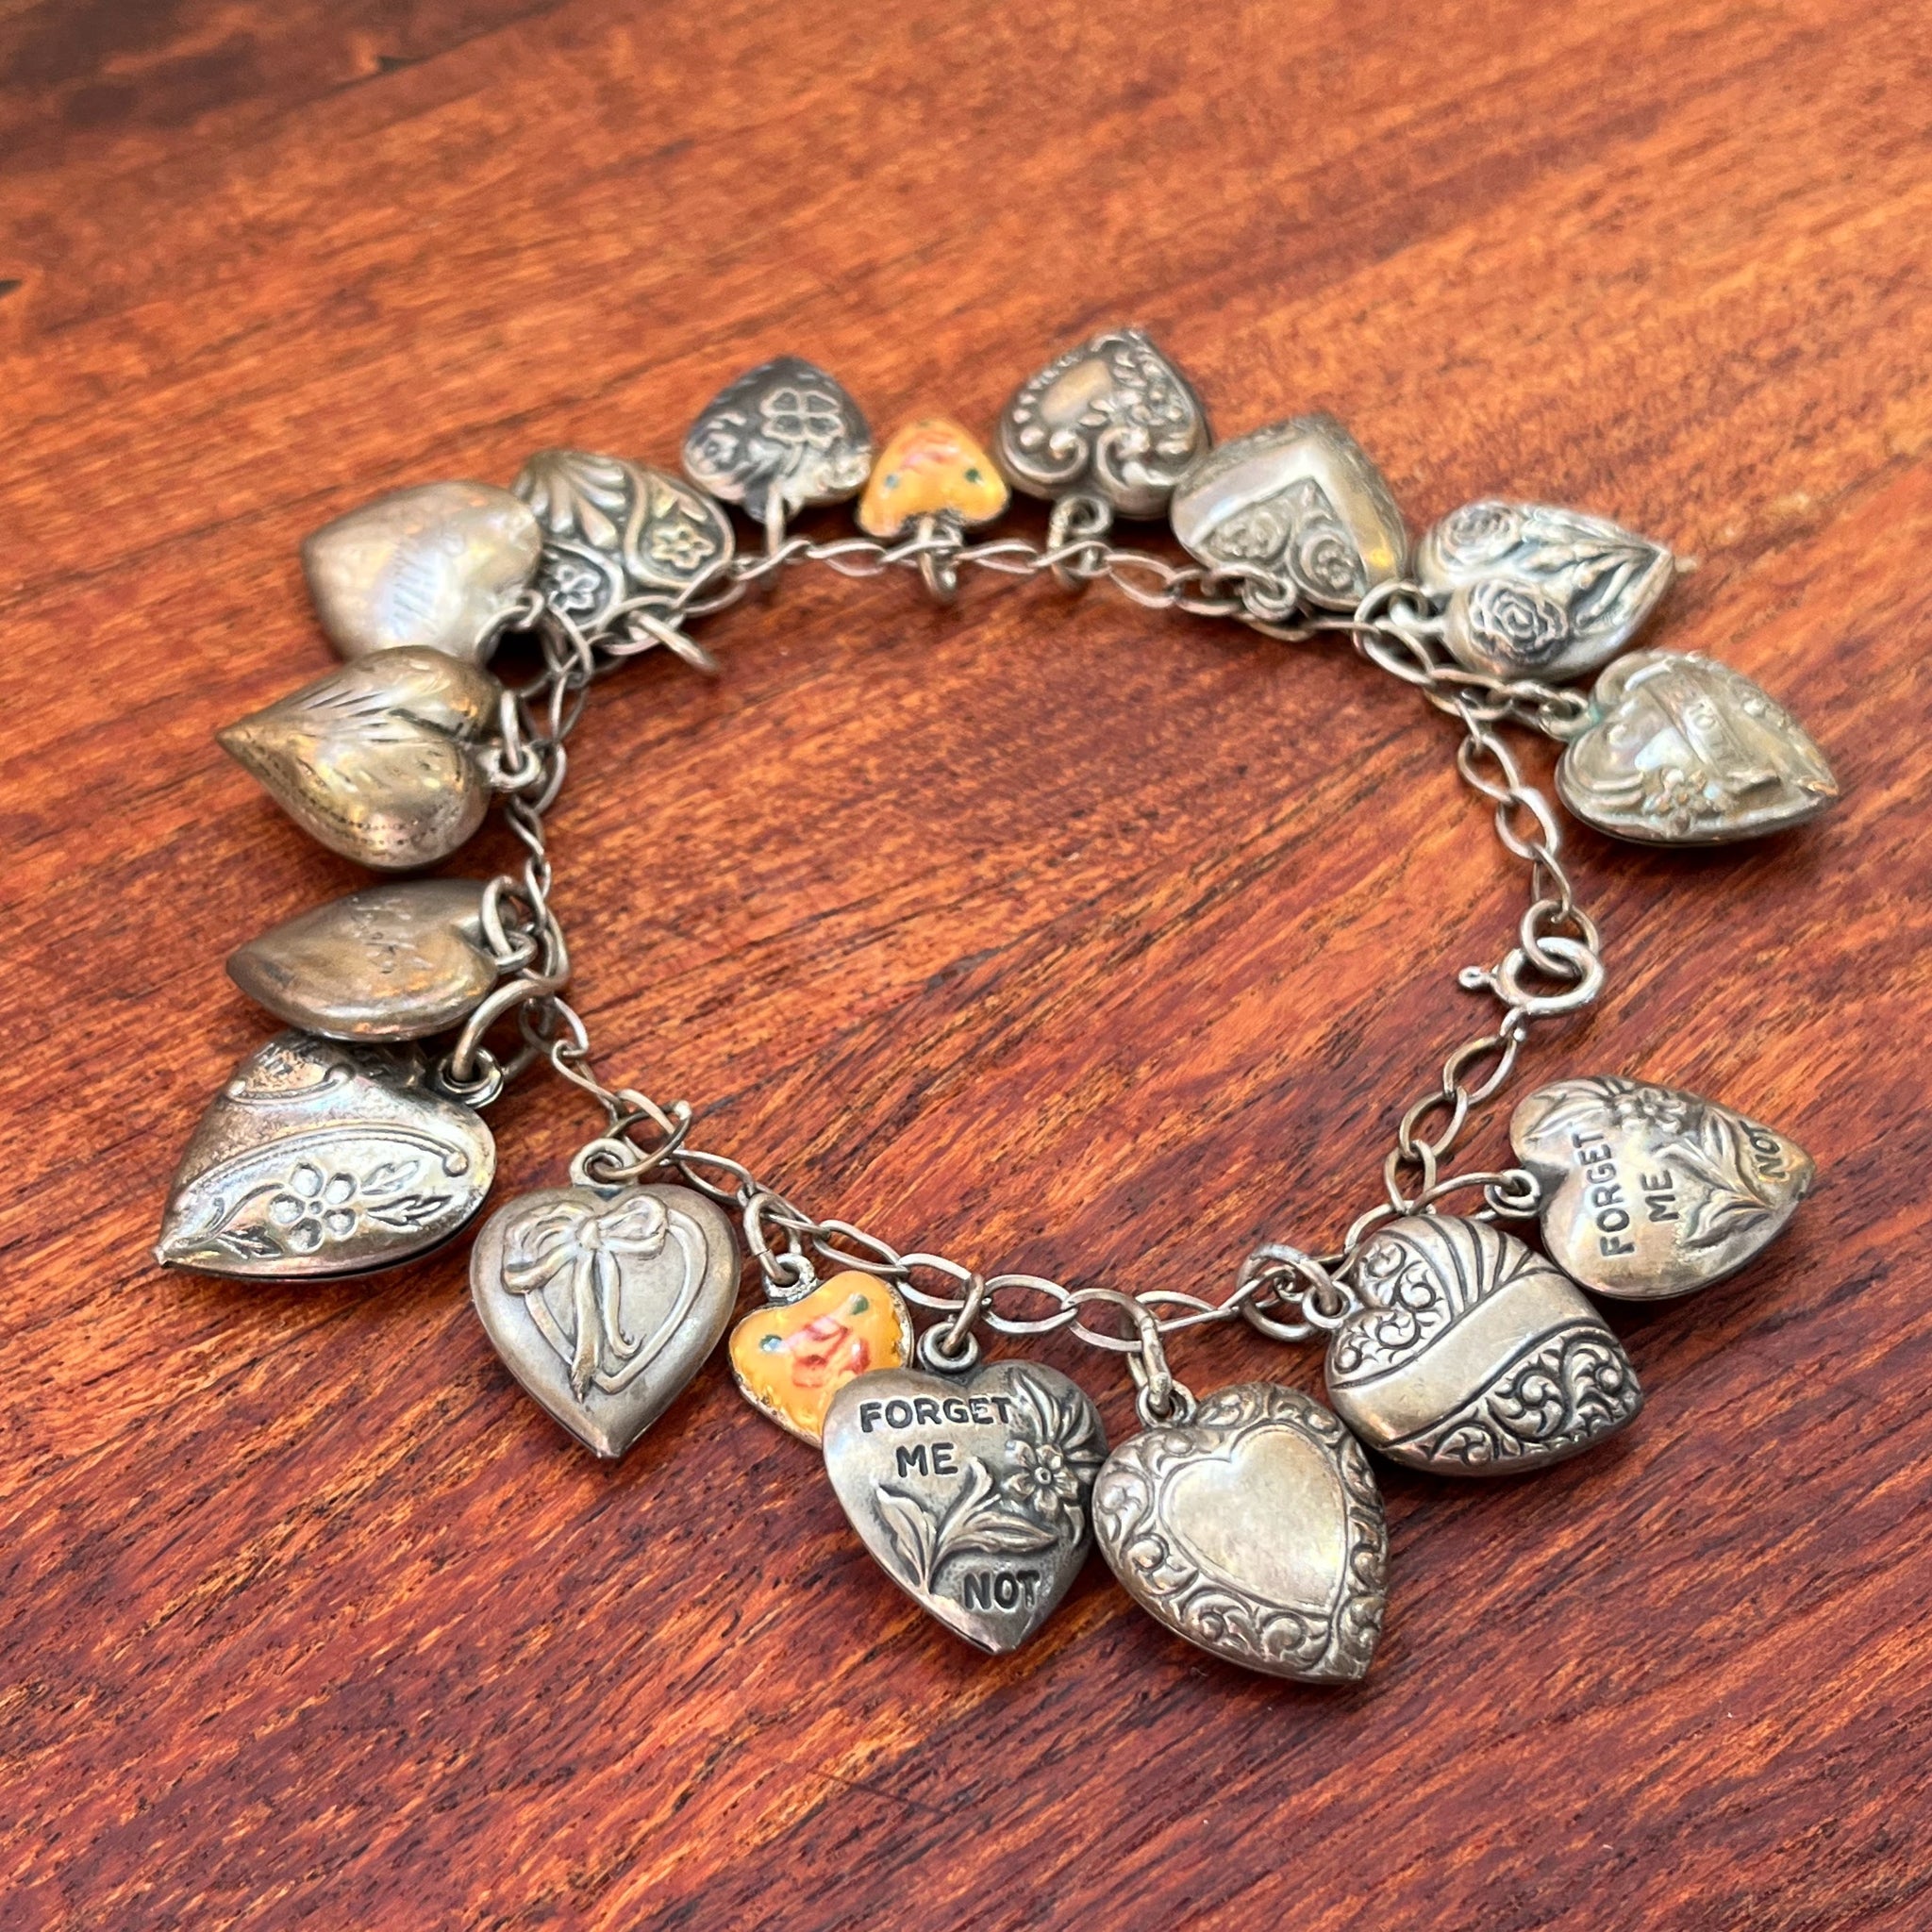 Edwardian Sterling Silver Repoussé Bangle Bracelet with Heart Charm